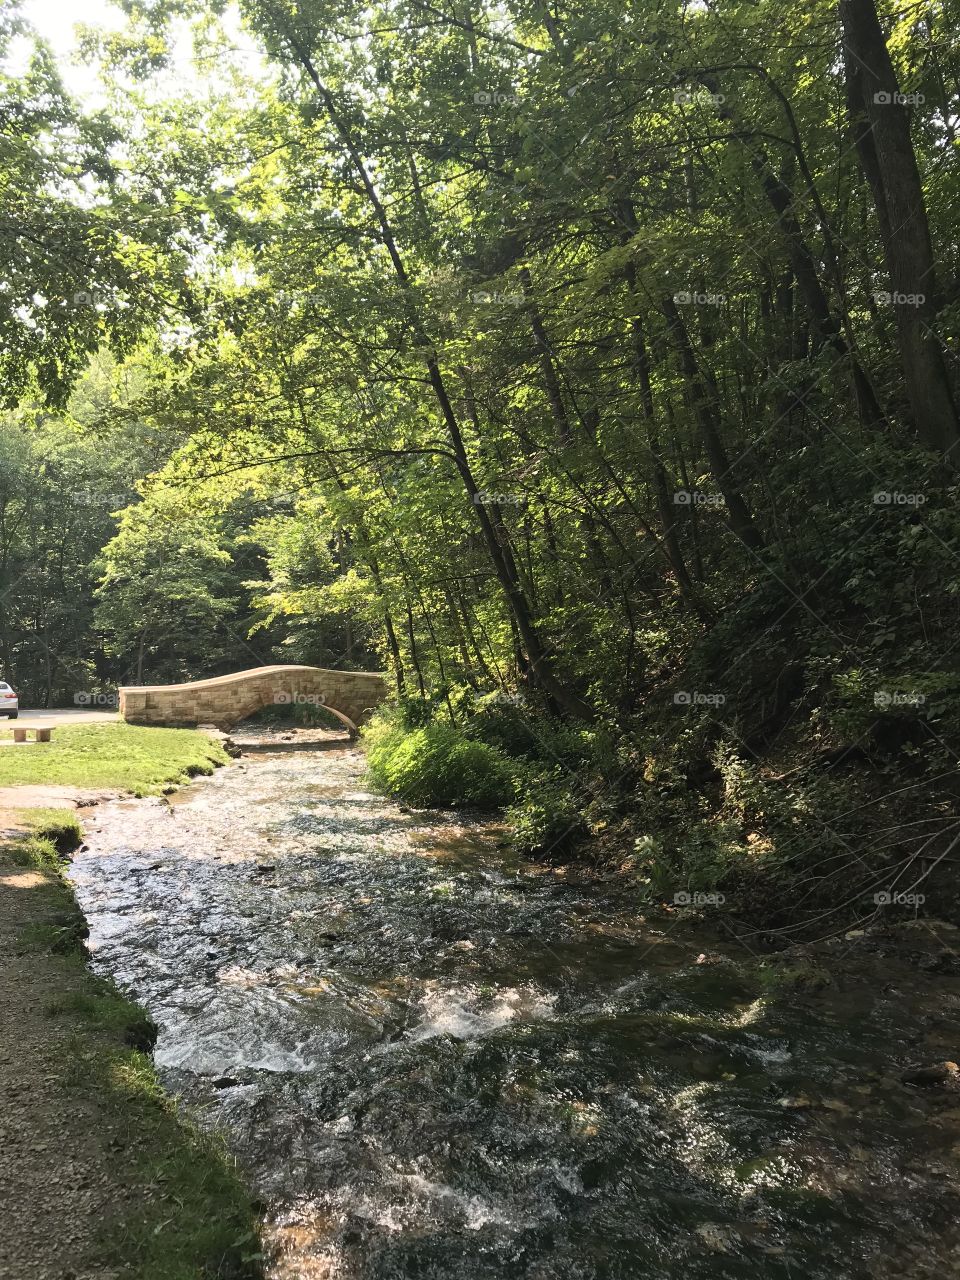 Creek, stone bridge, and wooded area